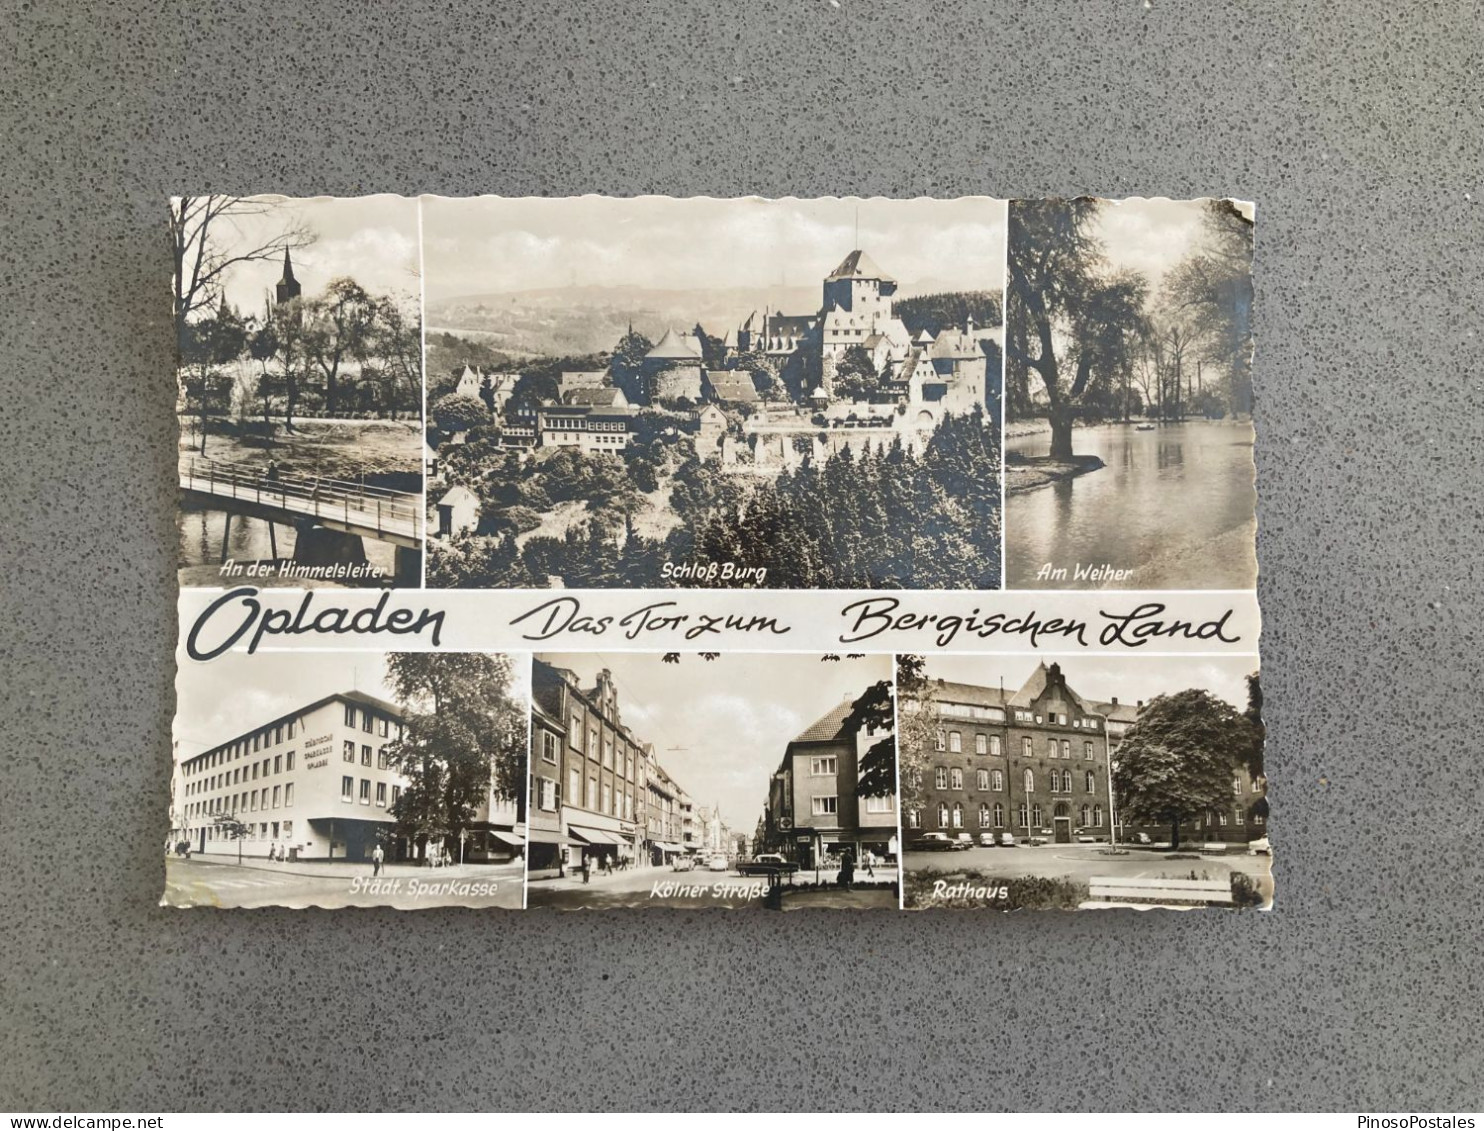 Opladen Das Tor Zum Bergischen Land Carte Postale Postcard - Leverkusen